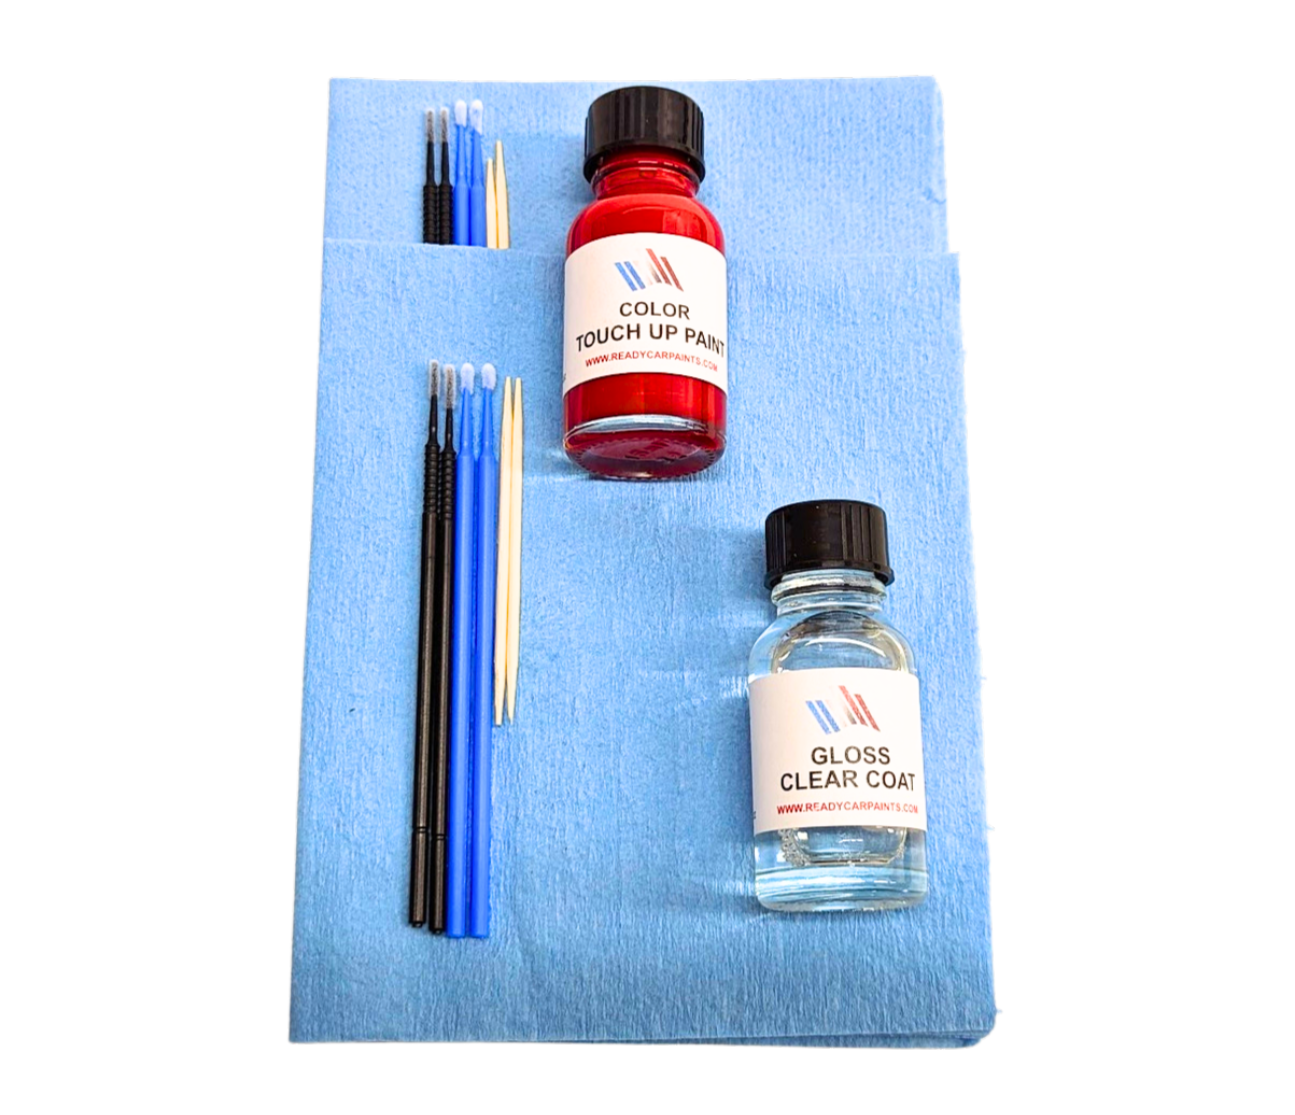 MINI COOPER C4S Enigmatic Blue Metallic Touch Up Paint Kit 100% OEM Color Match